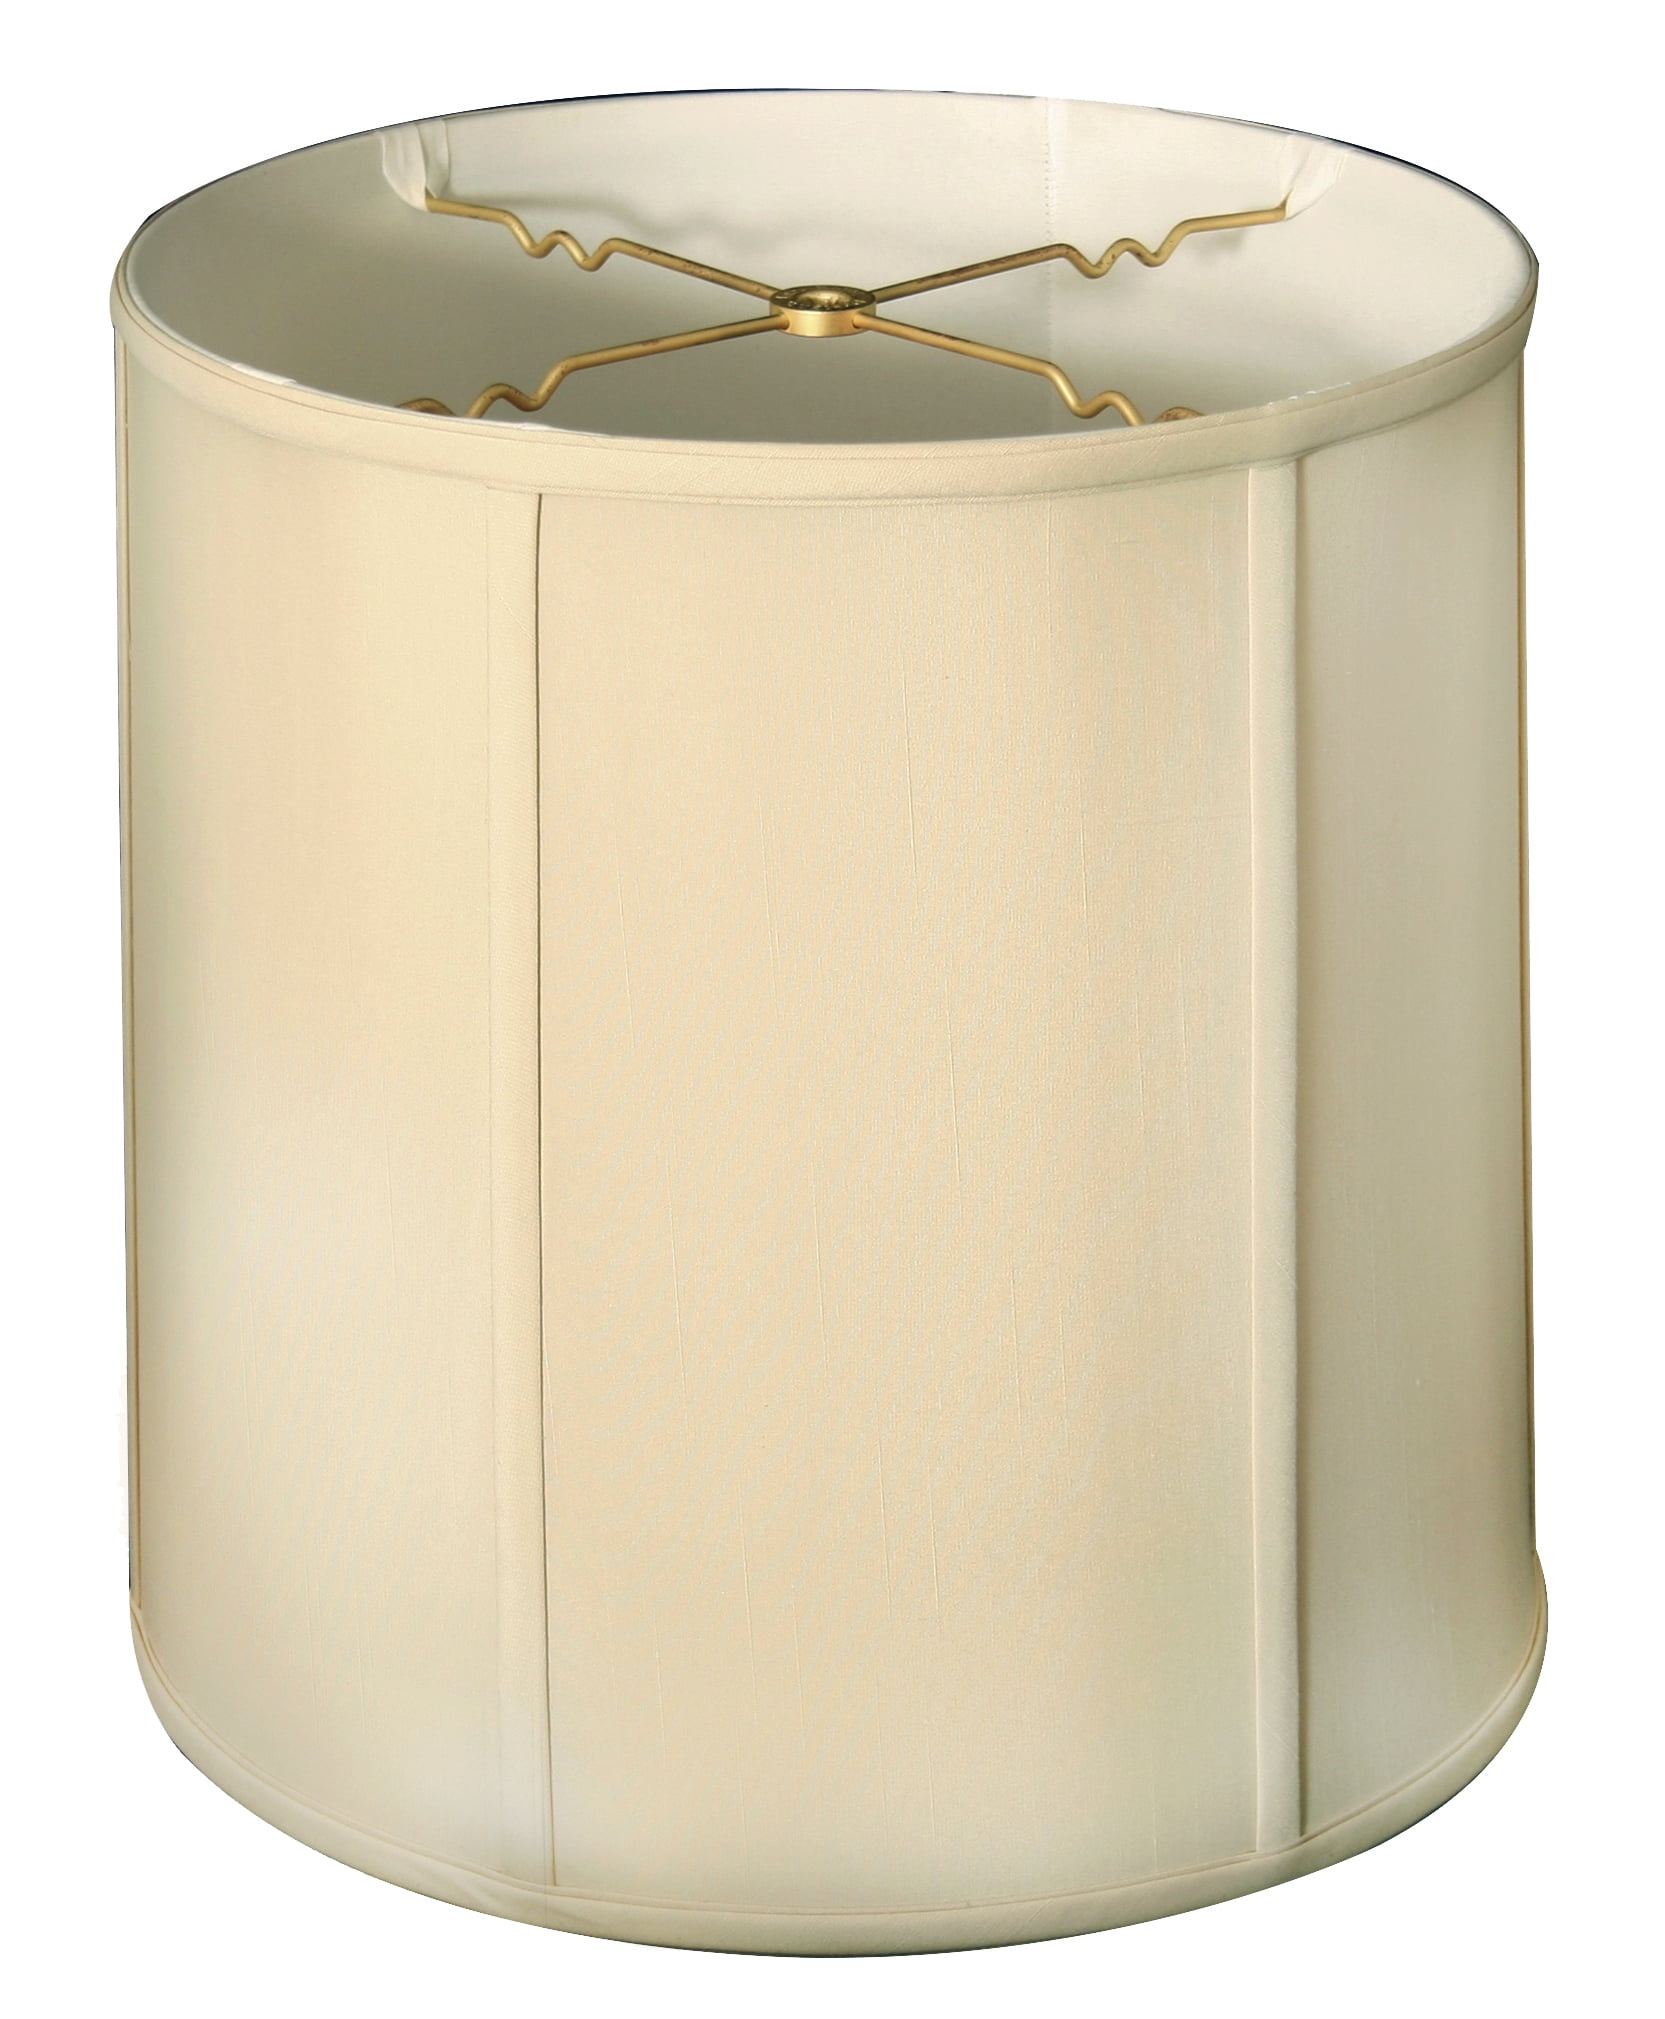 Royal Designs Basic Drum Lamp Shade, 15 Drum Lamp Shade